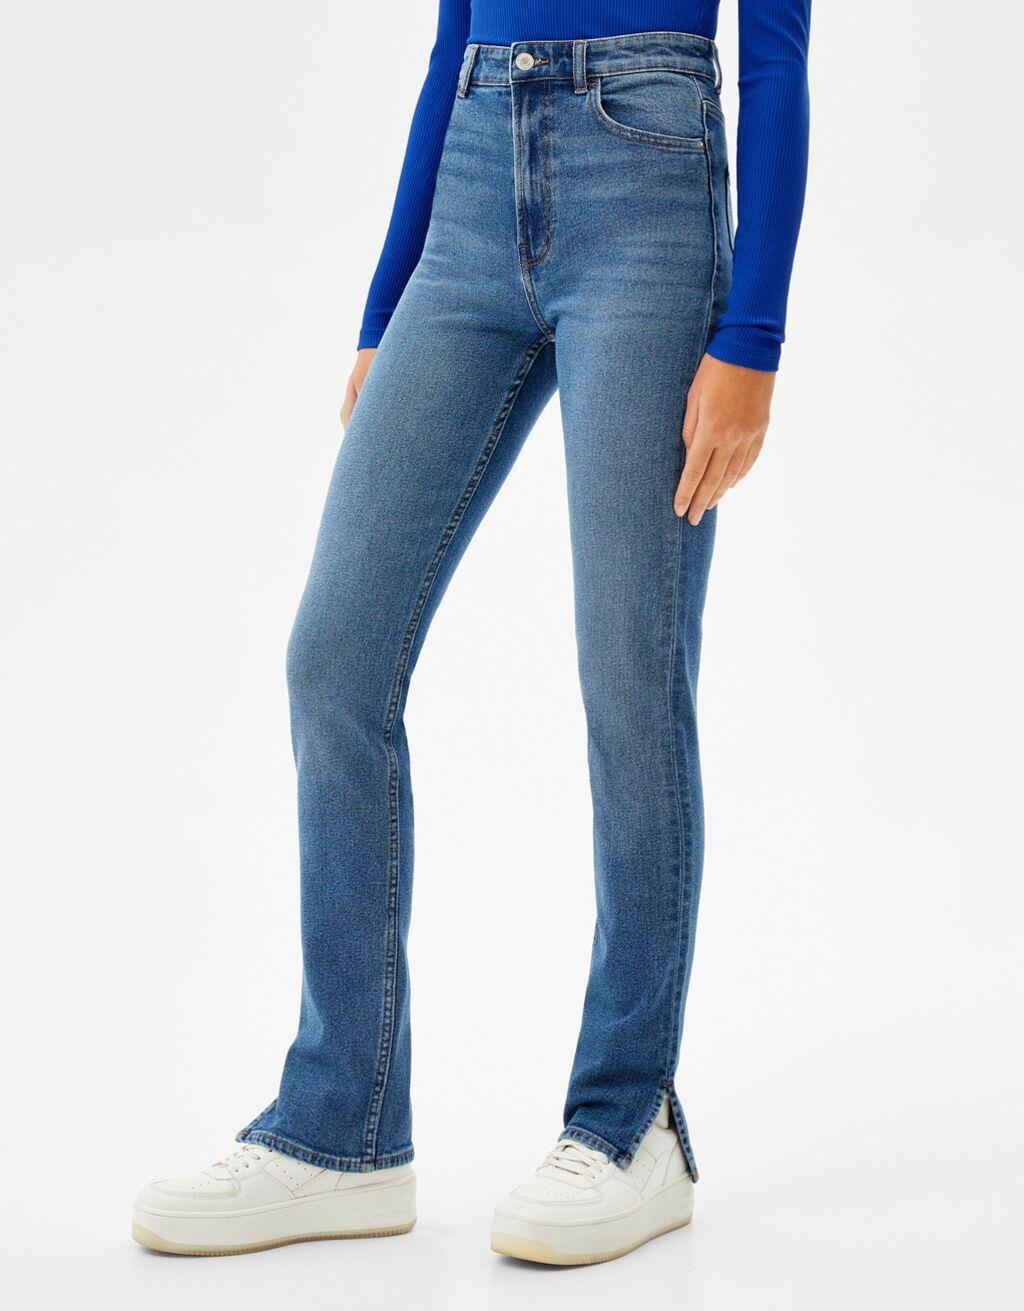 Jeans skinny high waist abertura, Bershka